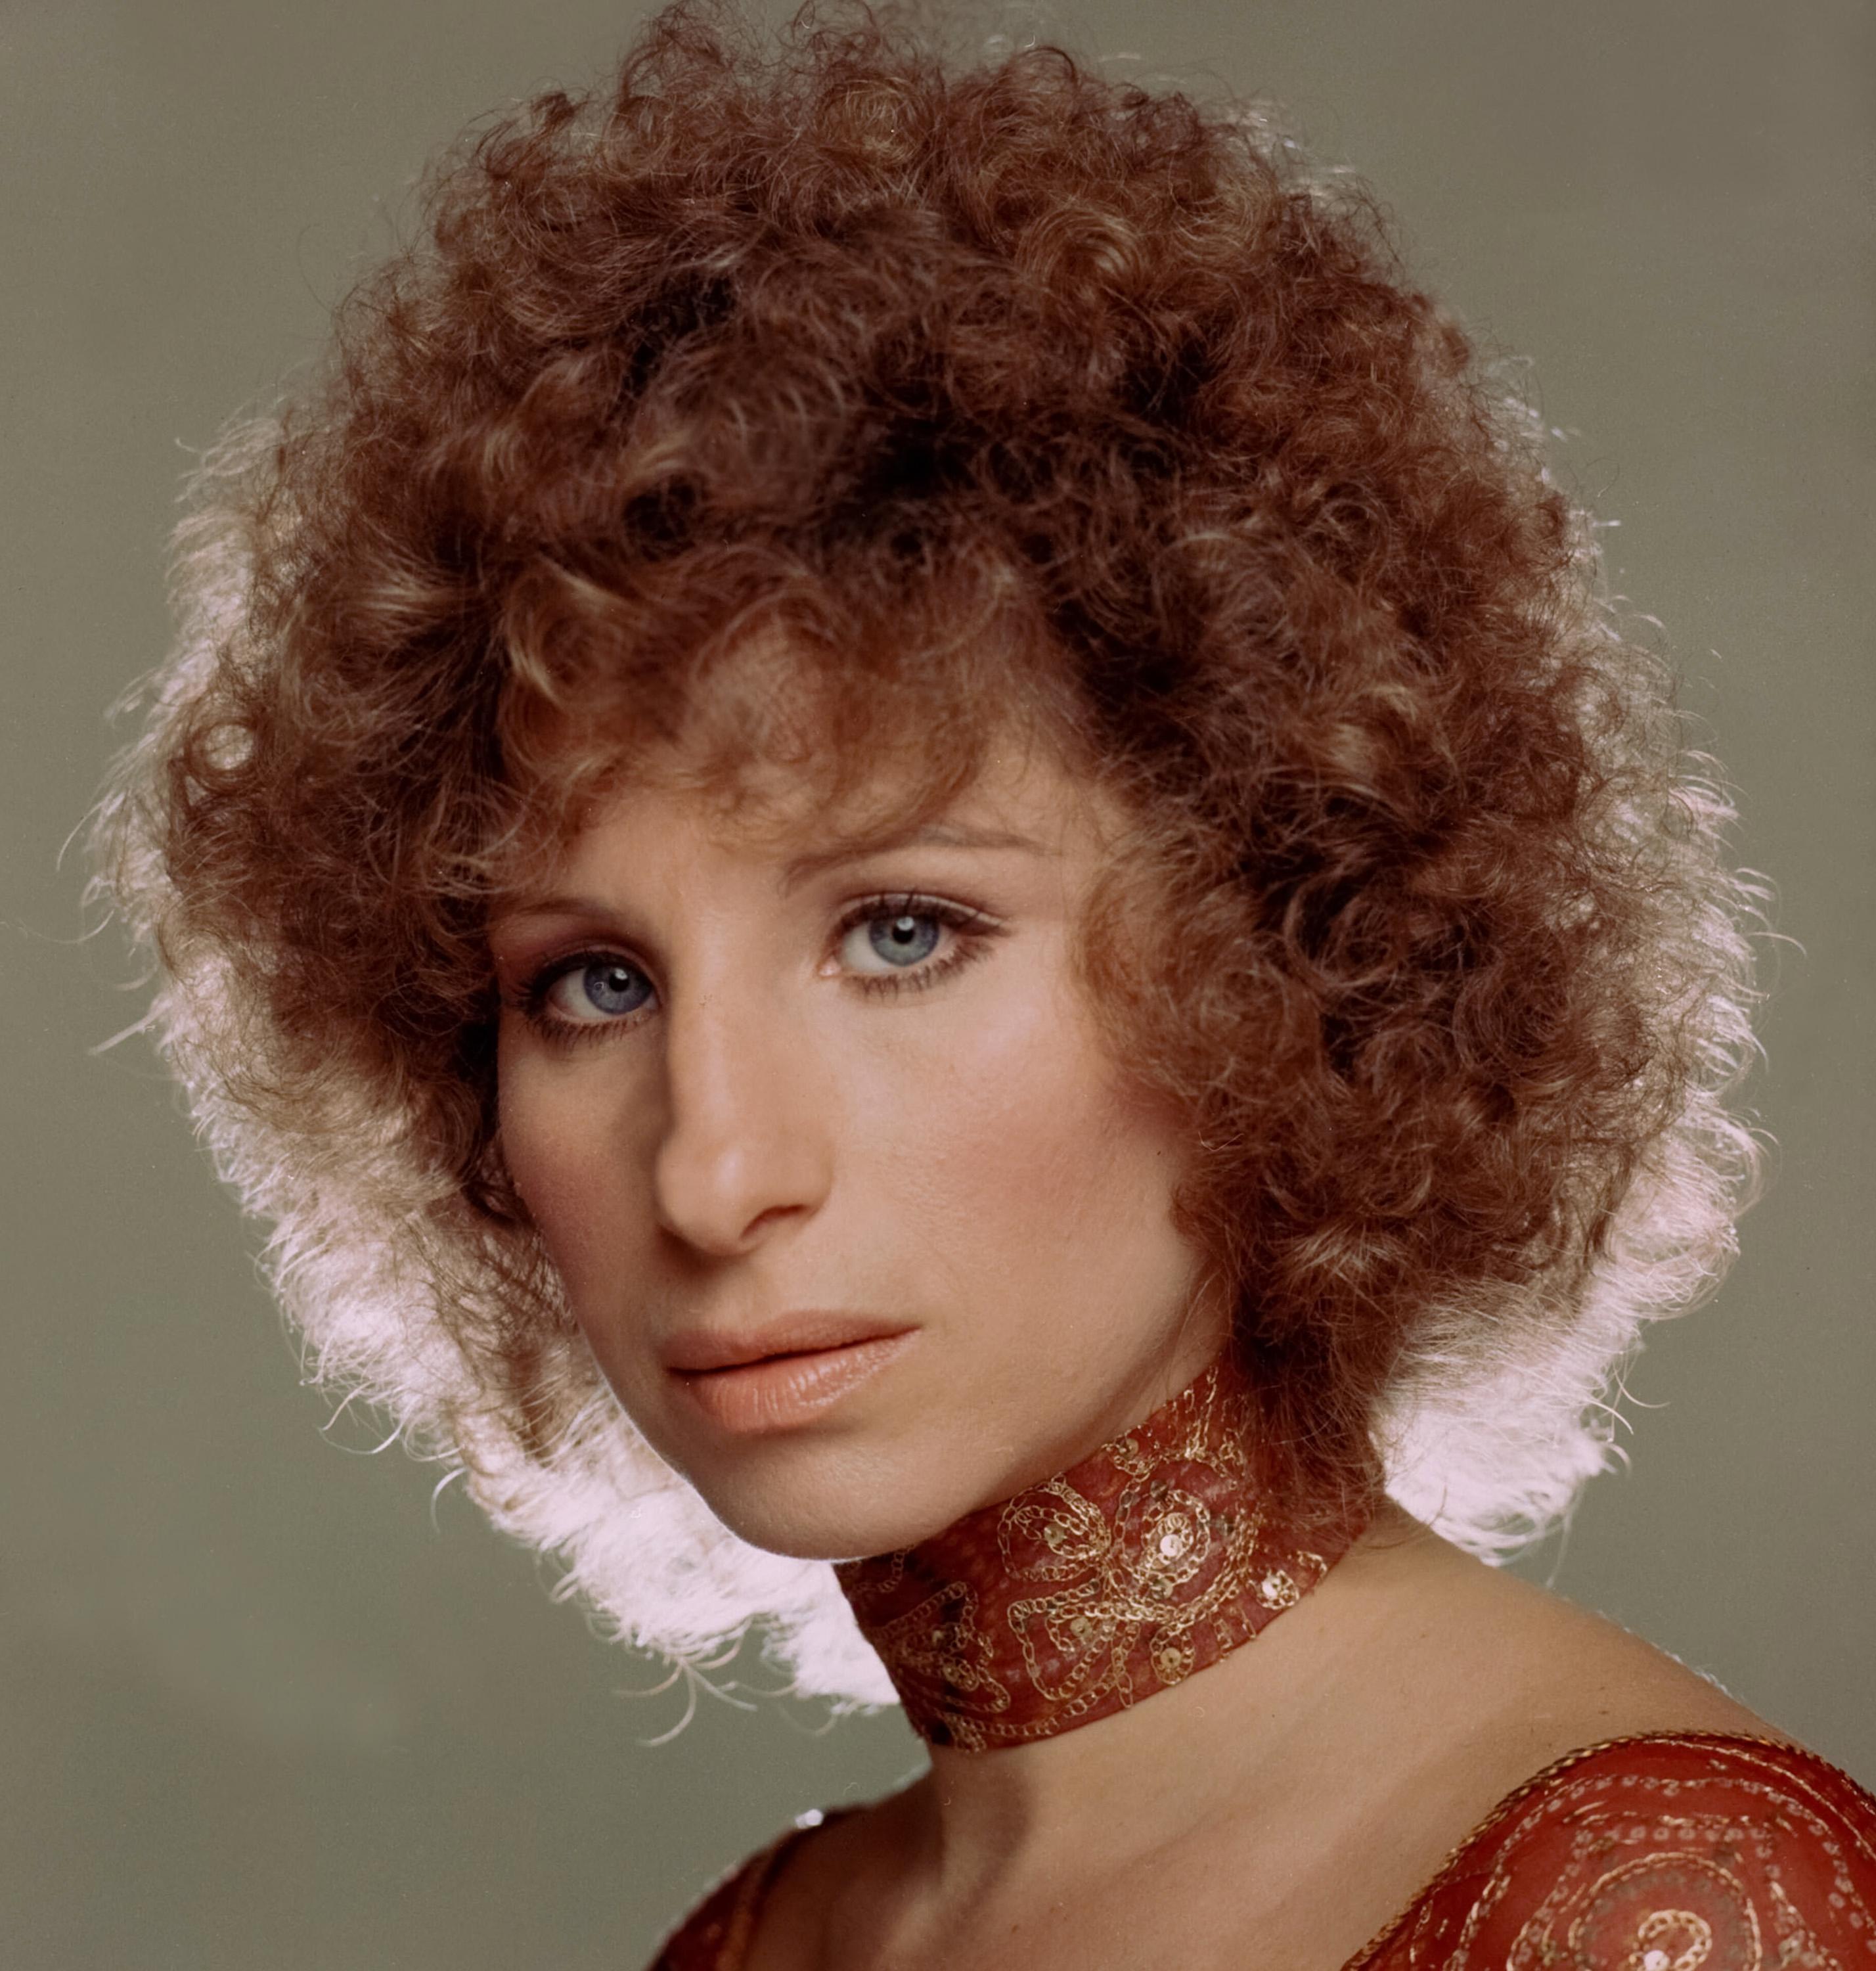 Unknown Portrait Photograph - Barbra Streisand  "A Star is Born" Globe Photos Fine Art Print